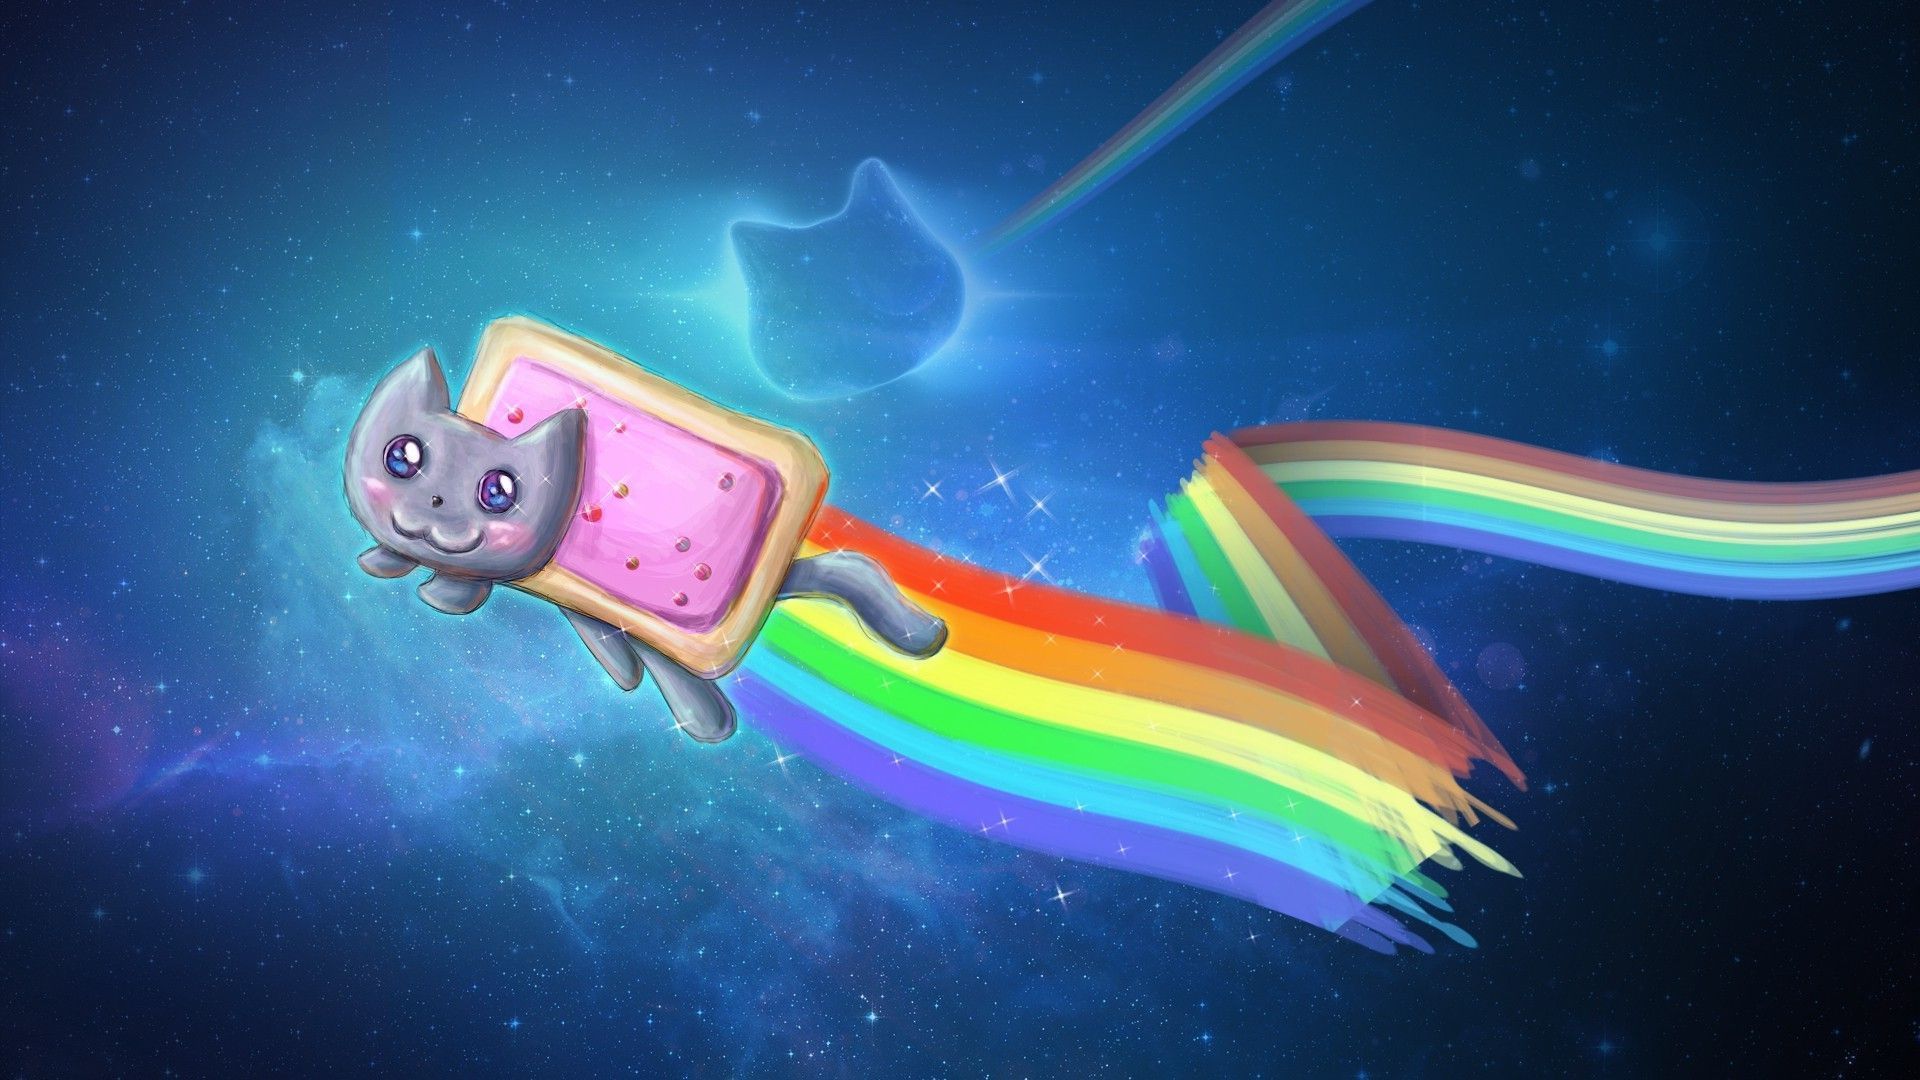 Nyan Cat wallpaper hd free download